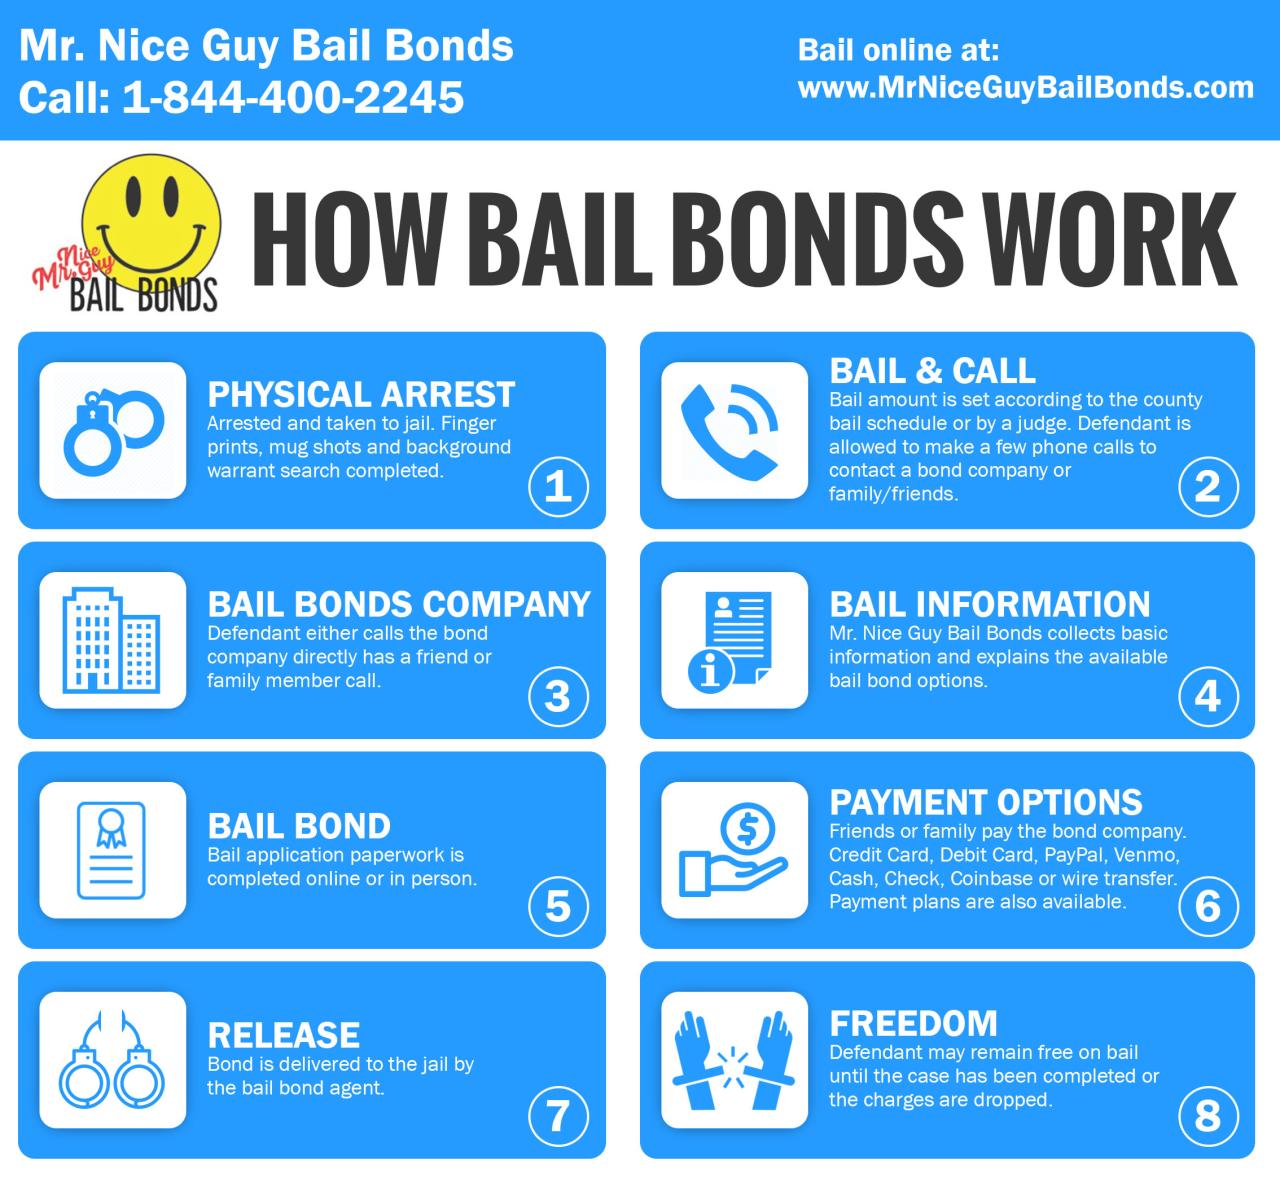 How bail bonds work in California